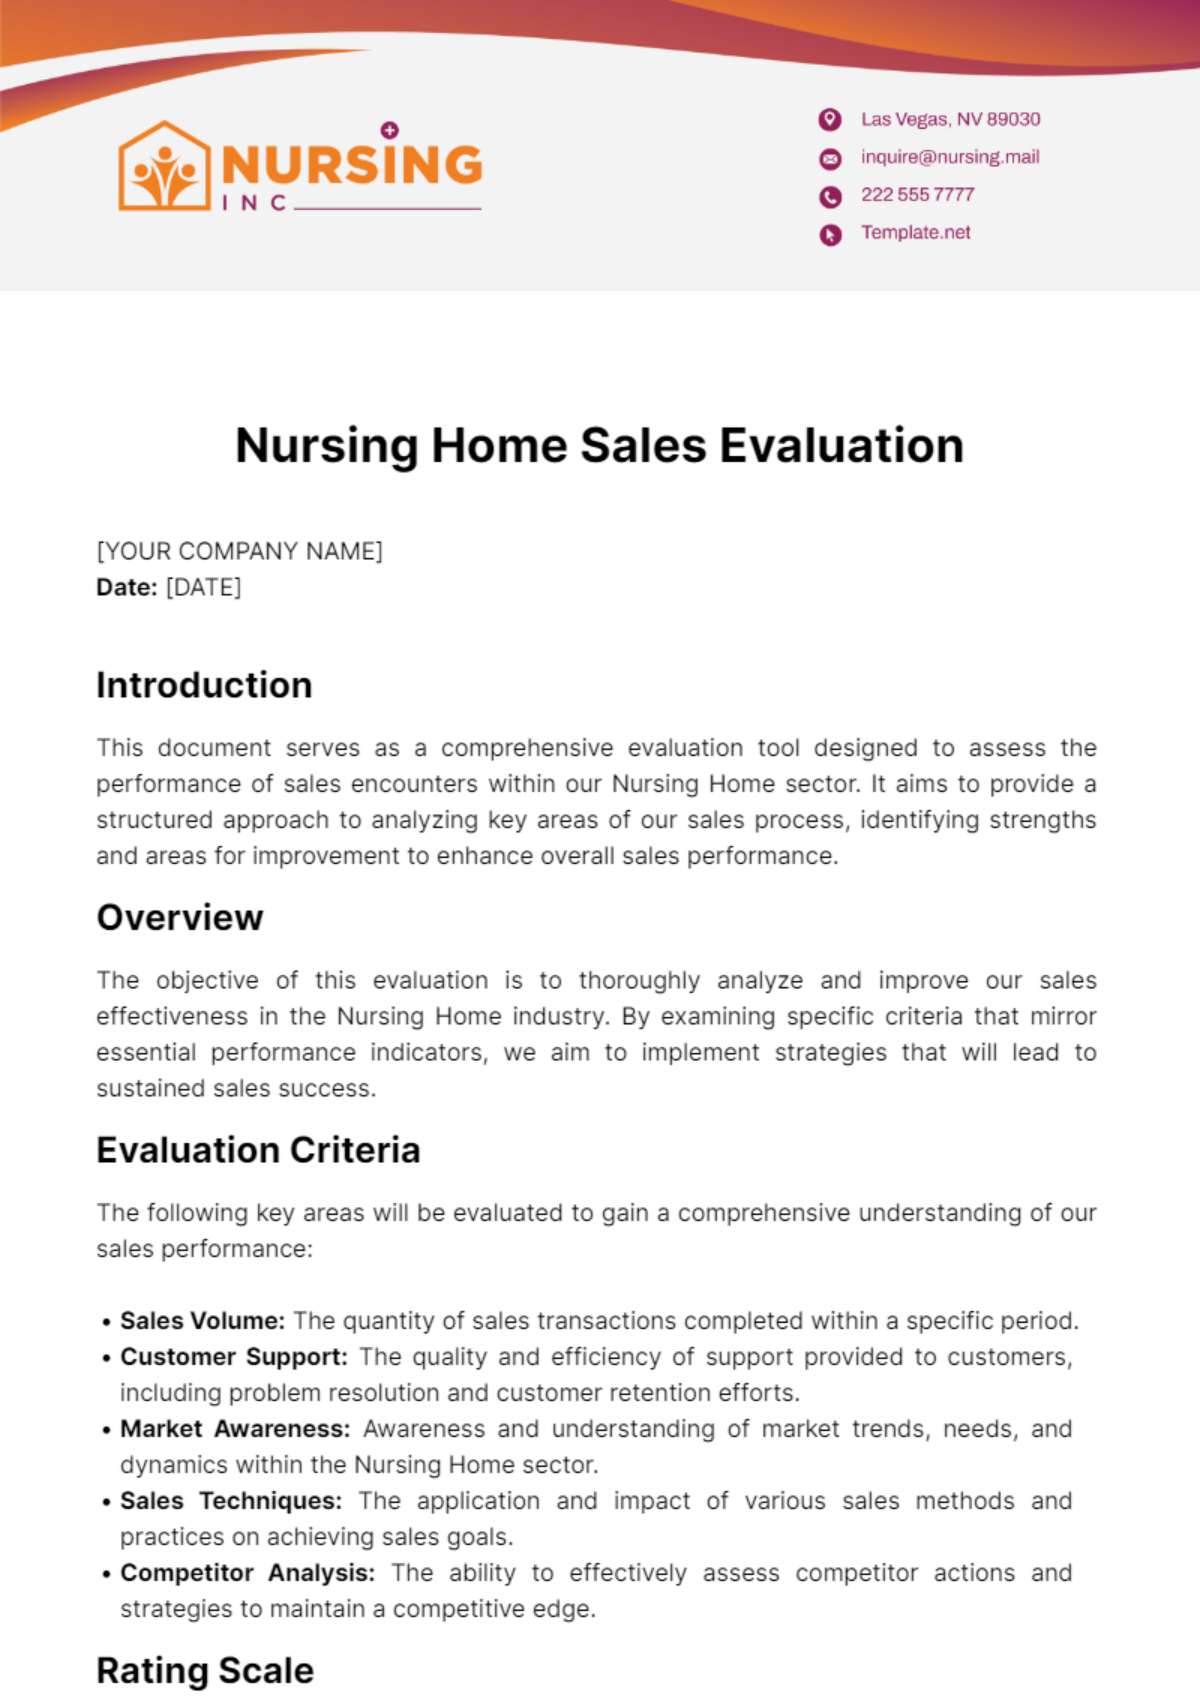 Nursing Home Sales Evaluation Template